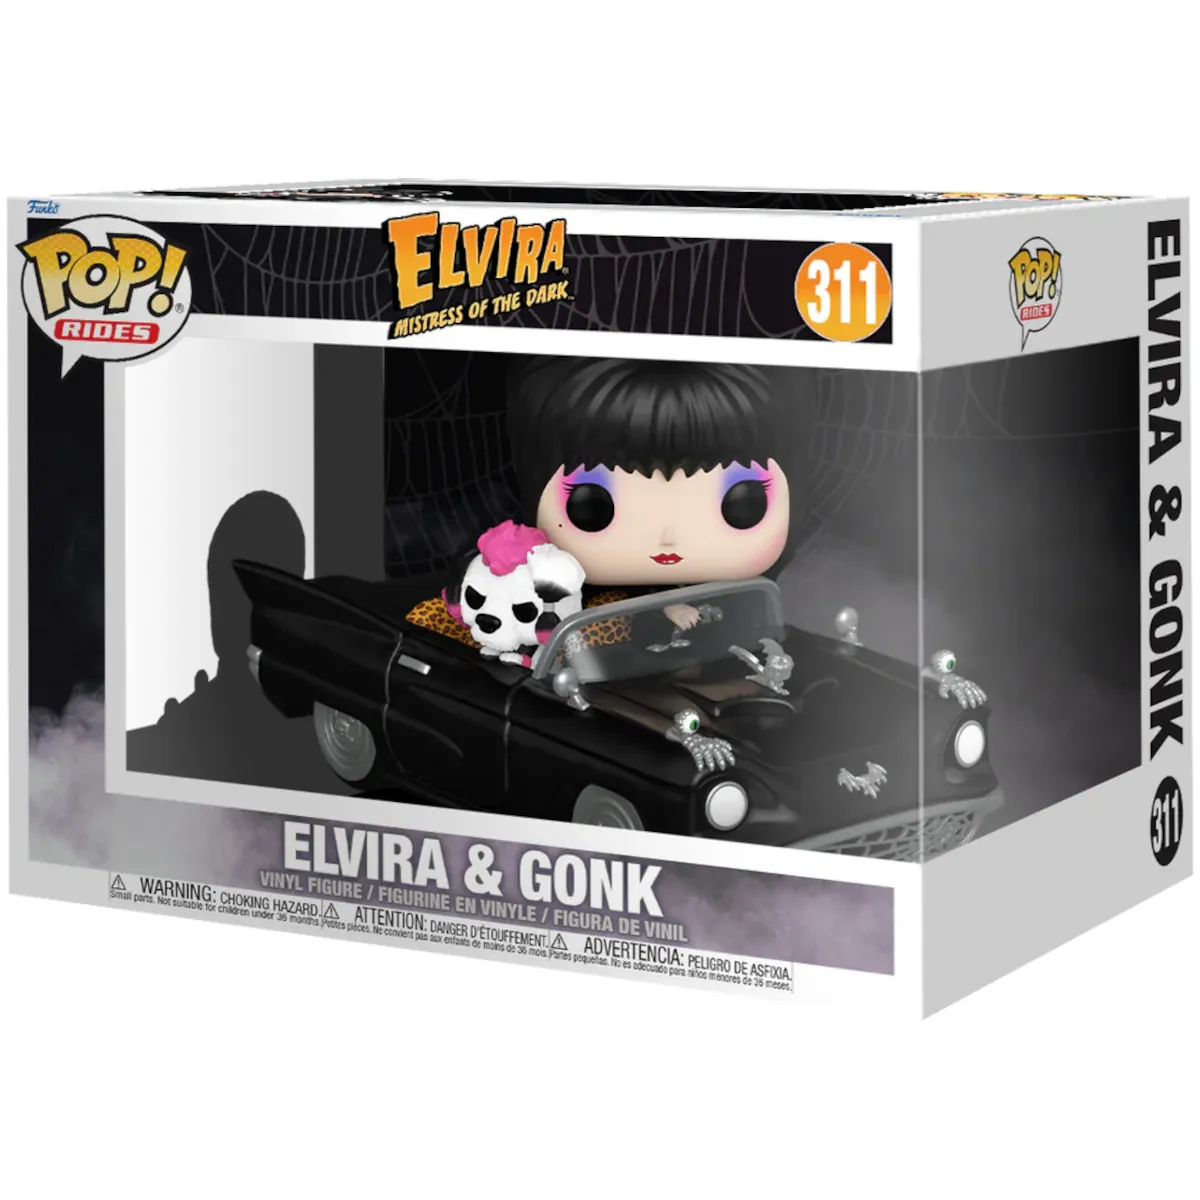 80693 Funko Pop! Rides - Elvira Mistress of the Dark - Elvira & Gonk Deluxe Collectable Vinyl Figure Box Front